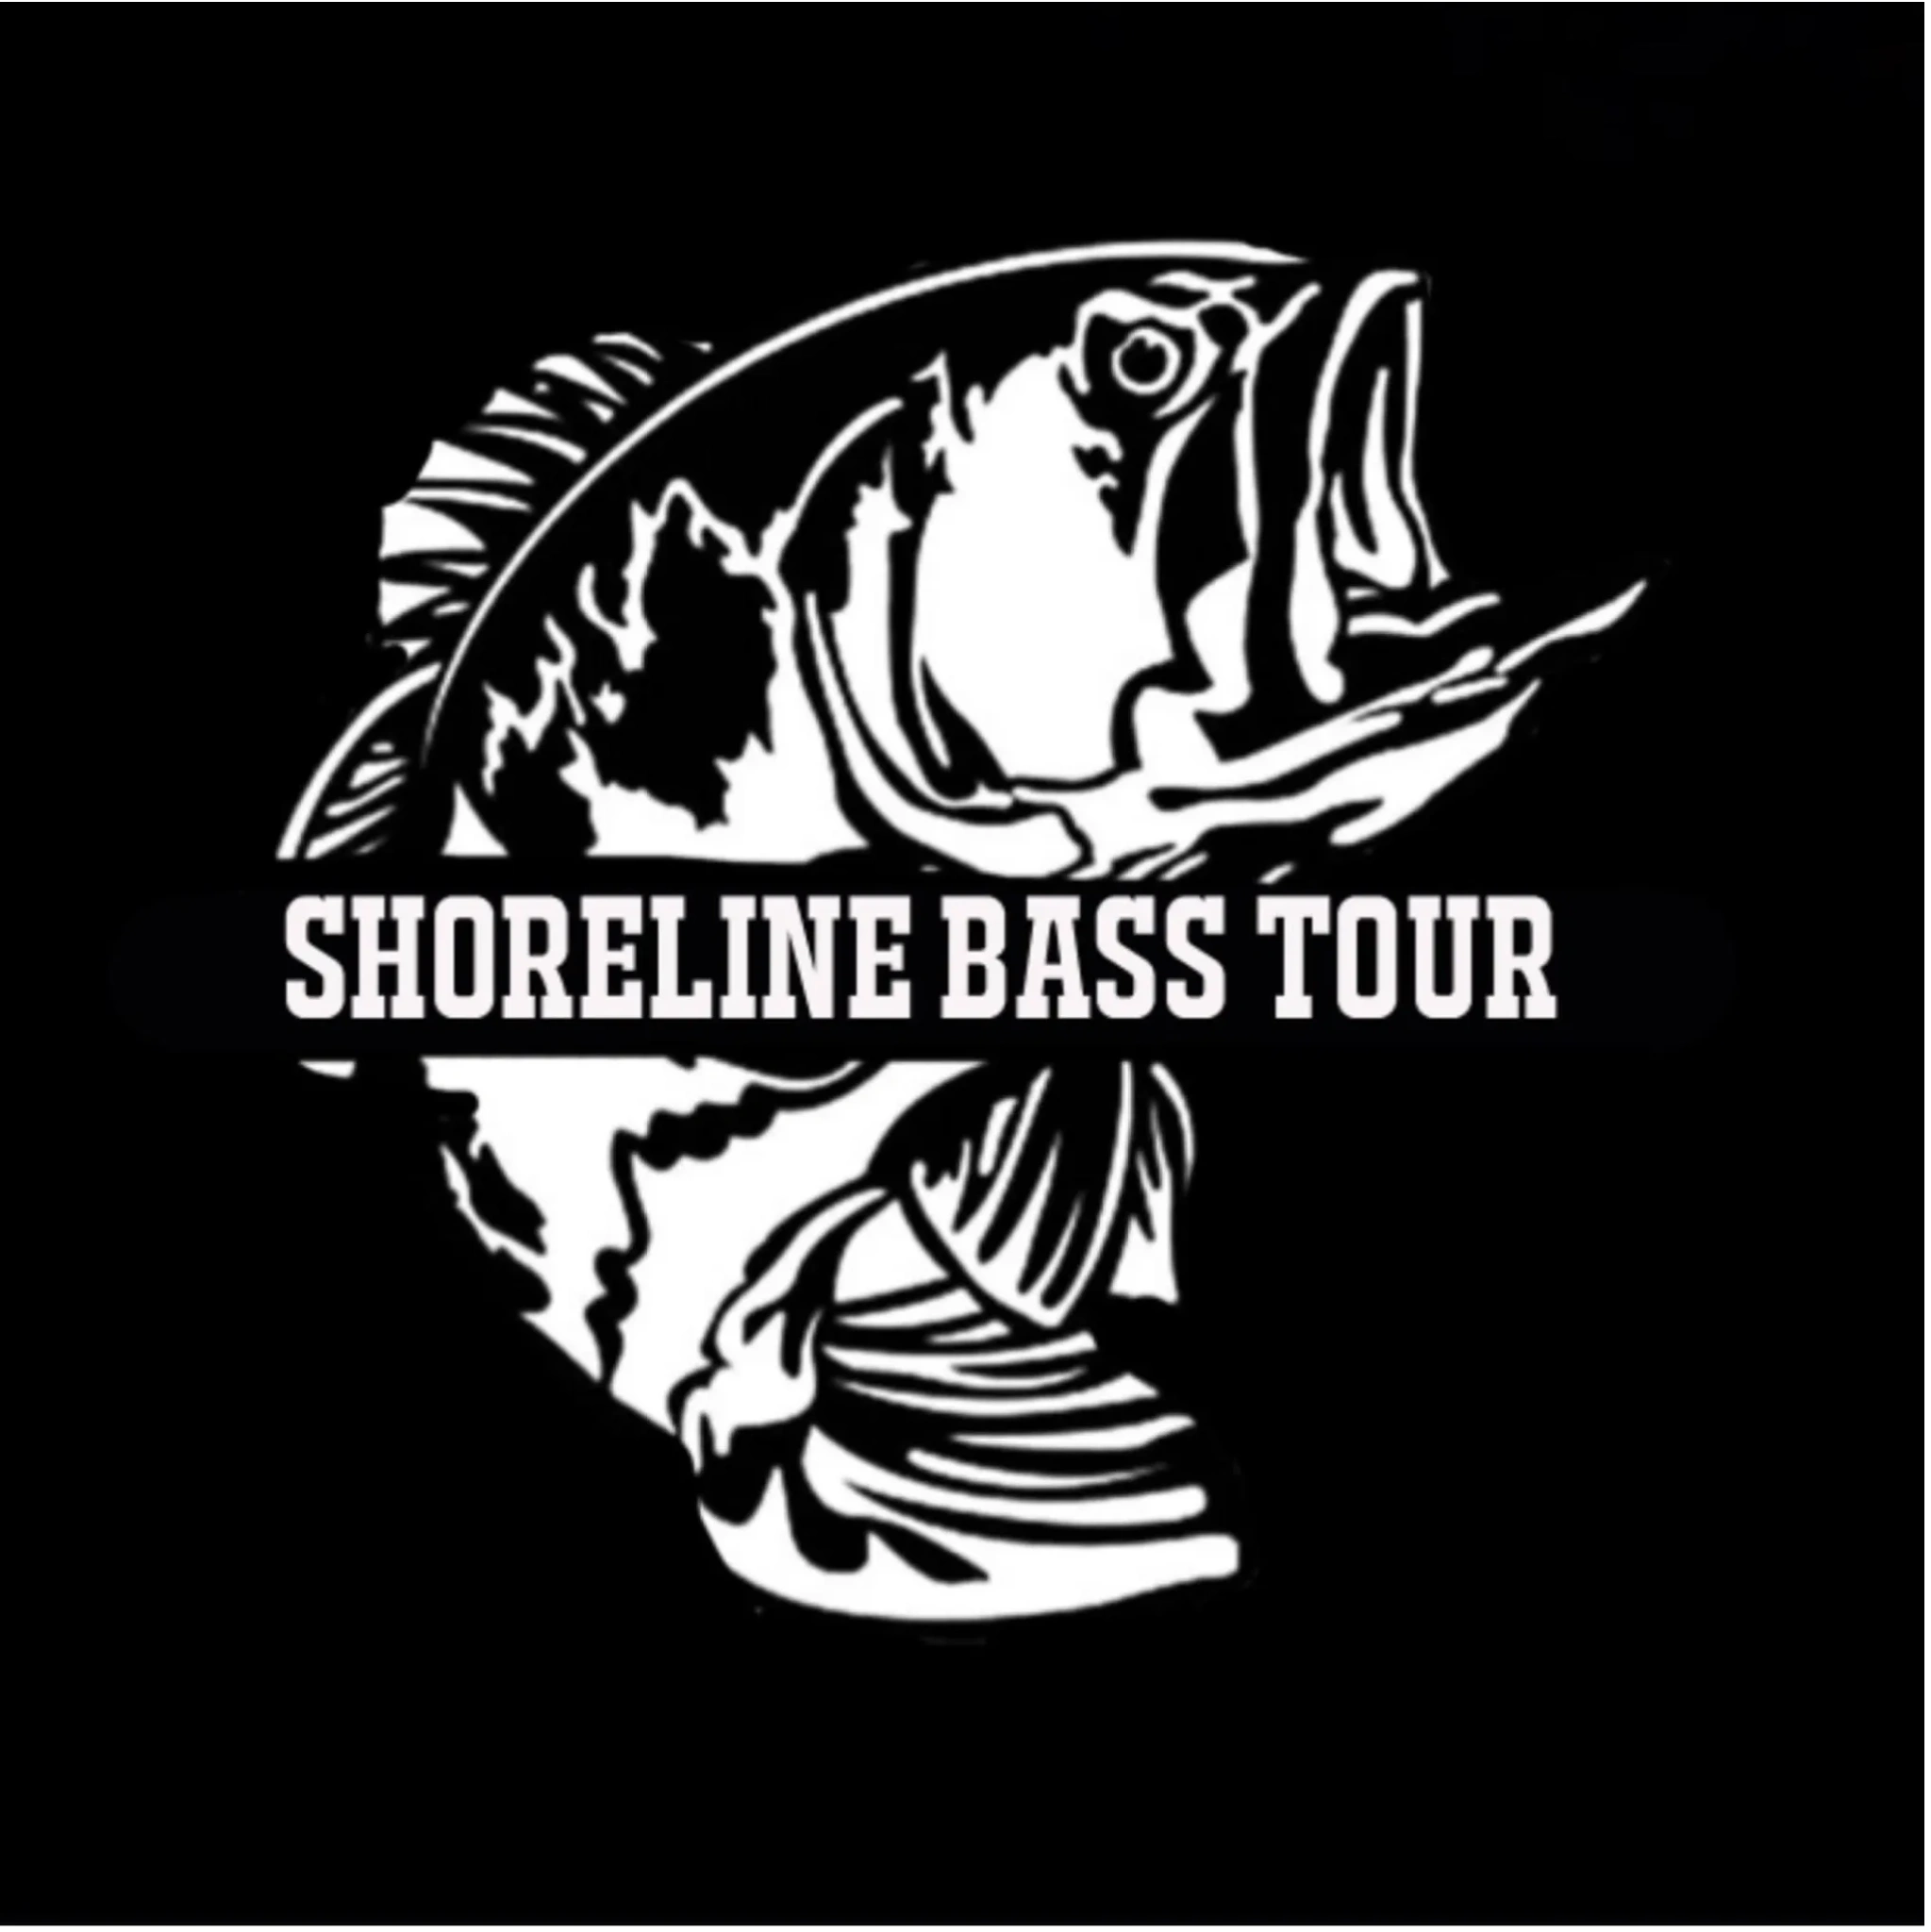 Shoreline bass tour